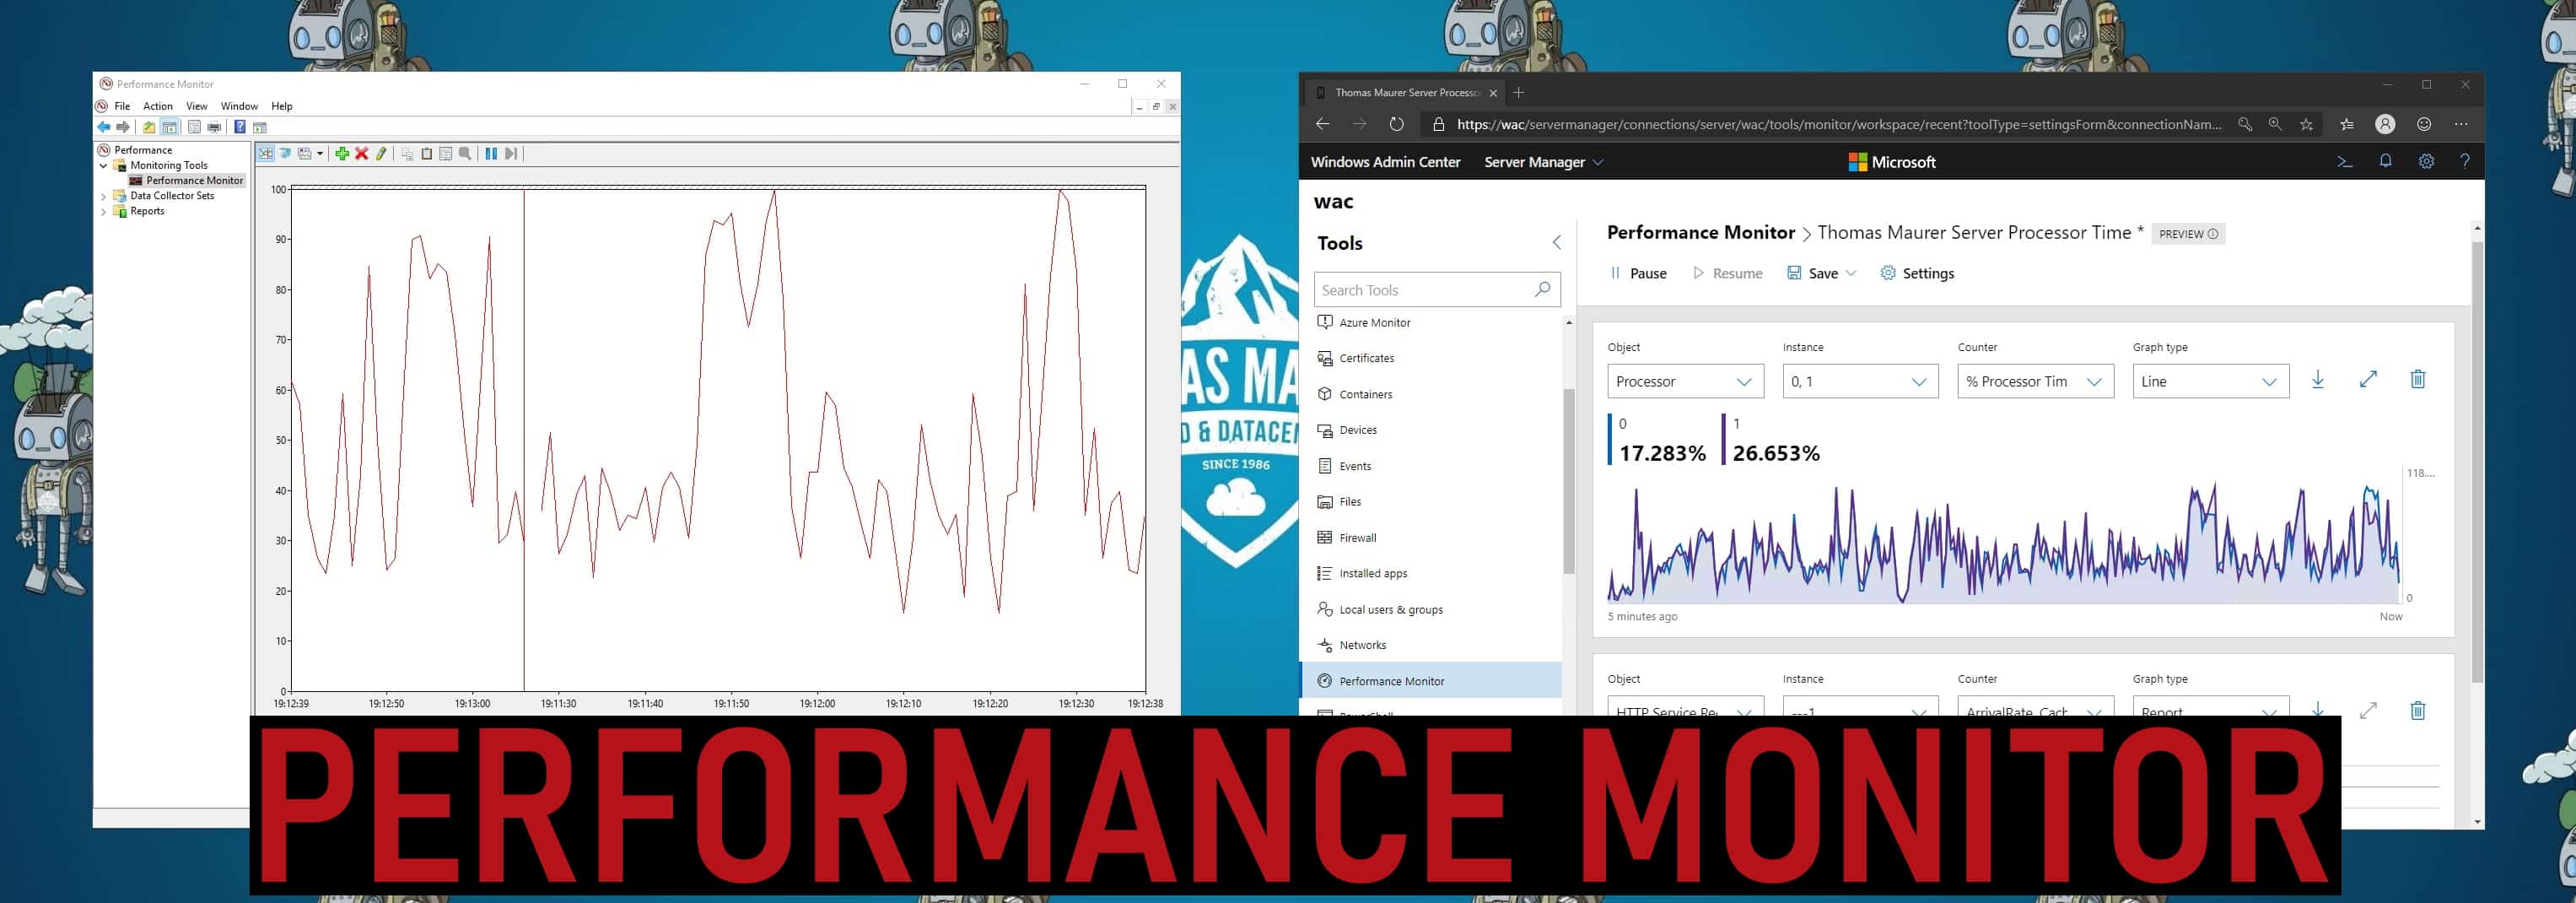 New Windows Server Performance Monitor